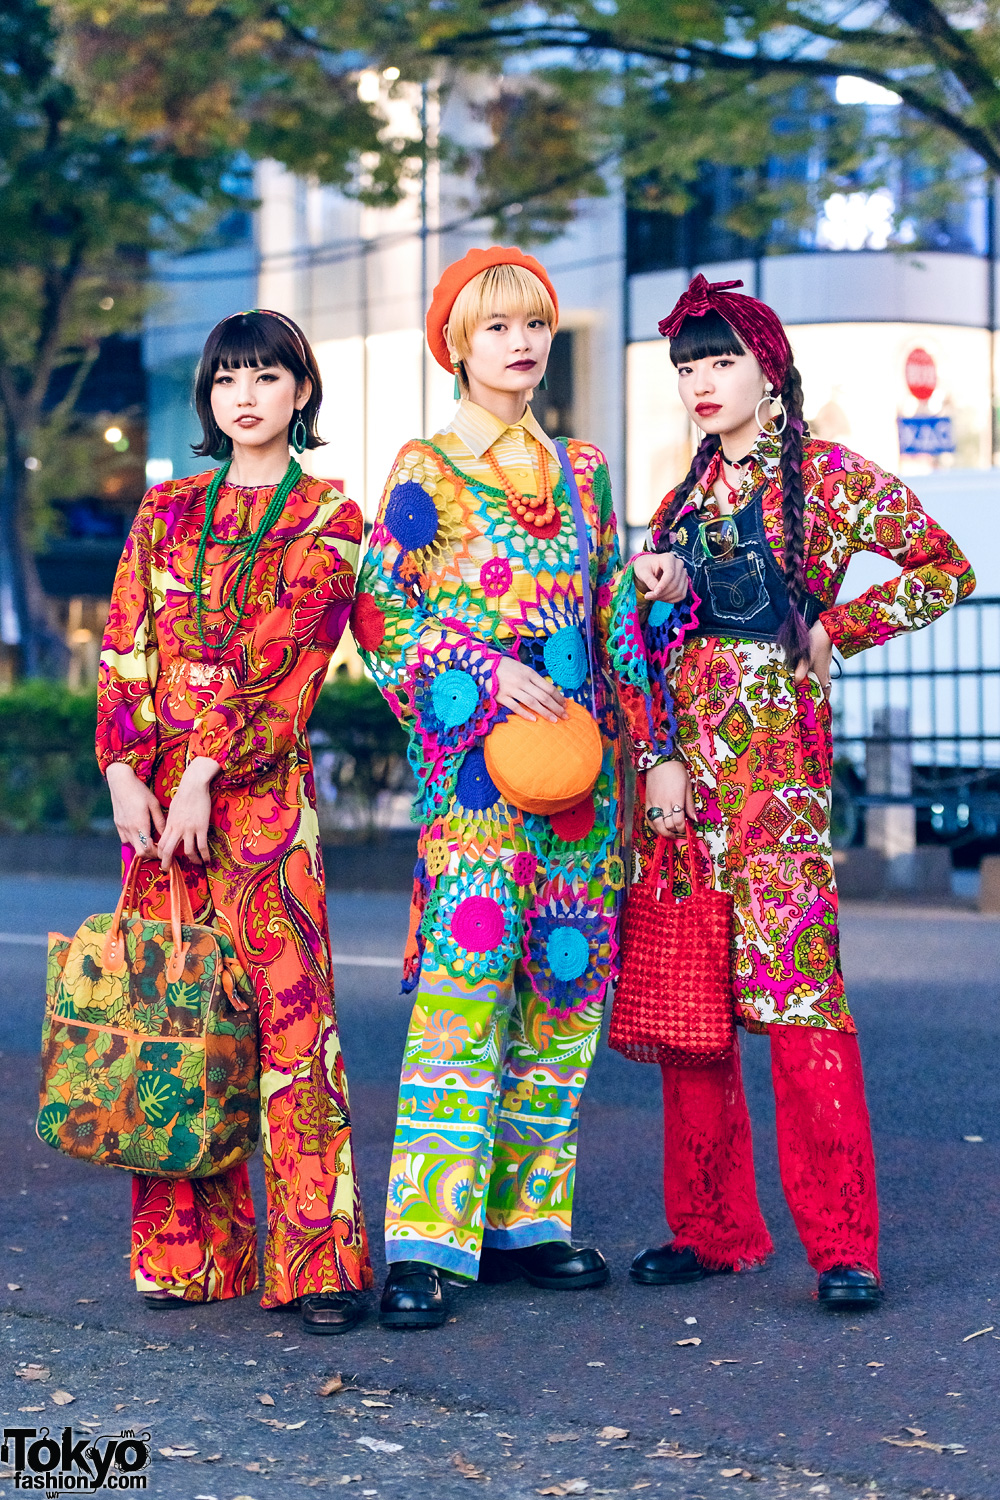 Retro Vintage Harajuku Street Styles w/ 60s Jumpsuit, Knit Dress, Floral Prints, Vivienne Westwood, Kiki Koenji, Oyasumi Club